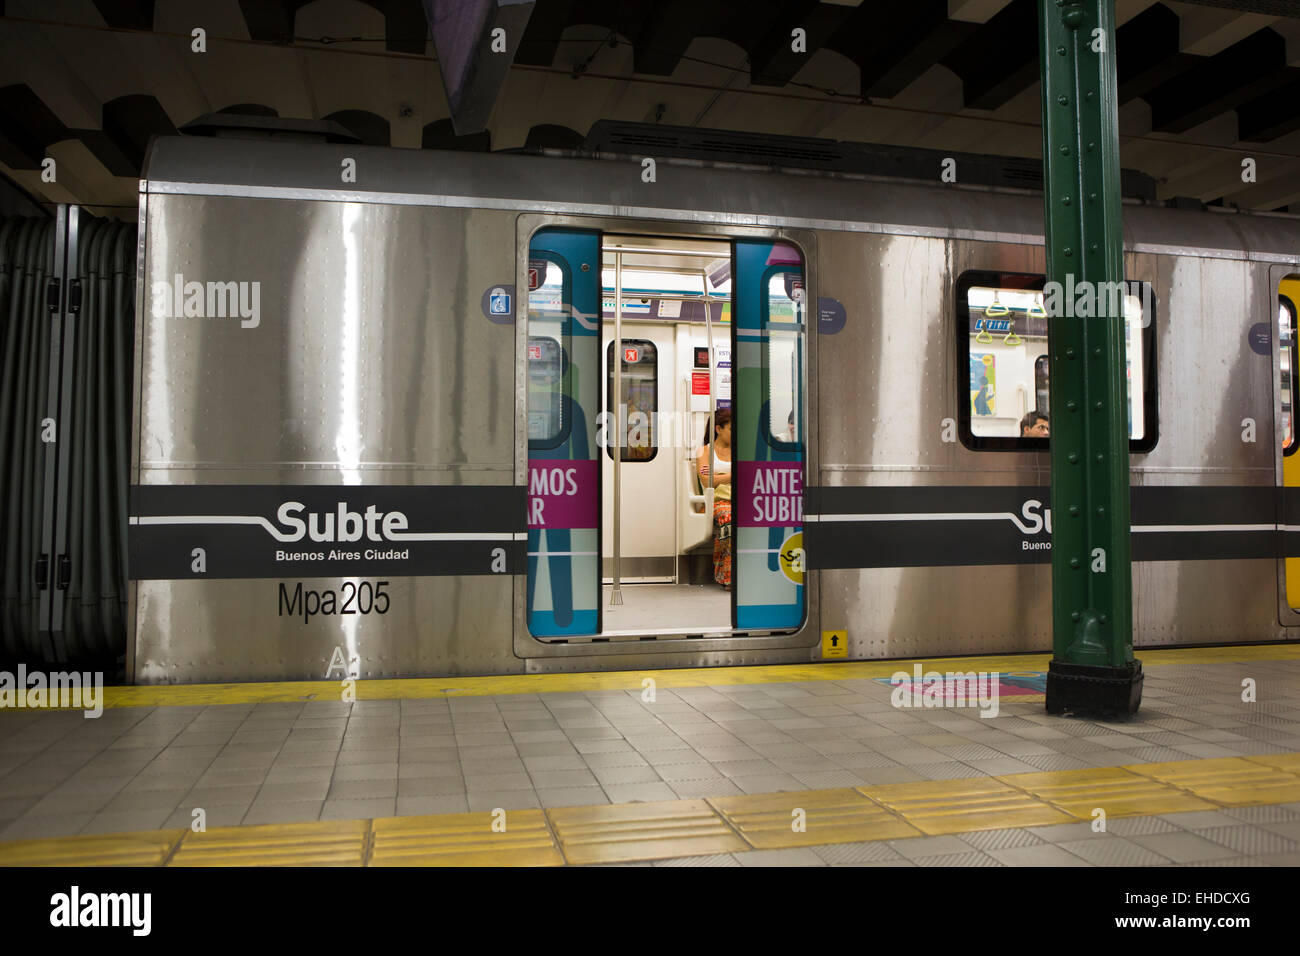 Argentina, Buenos Aires, Subte, underground metro railway system, train doors opening in piedras station Stock Photo